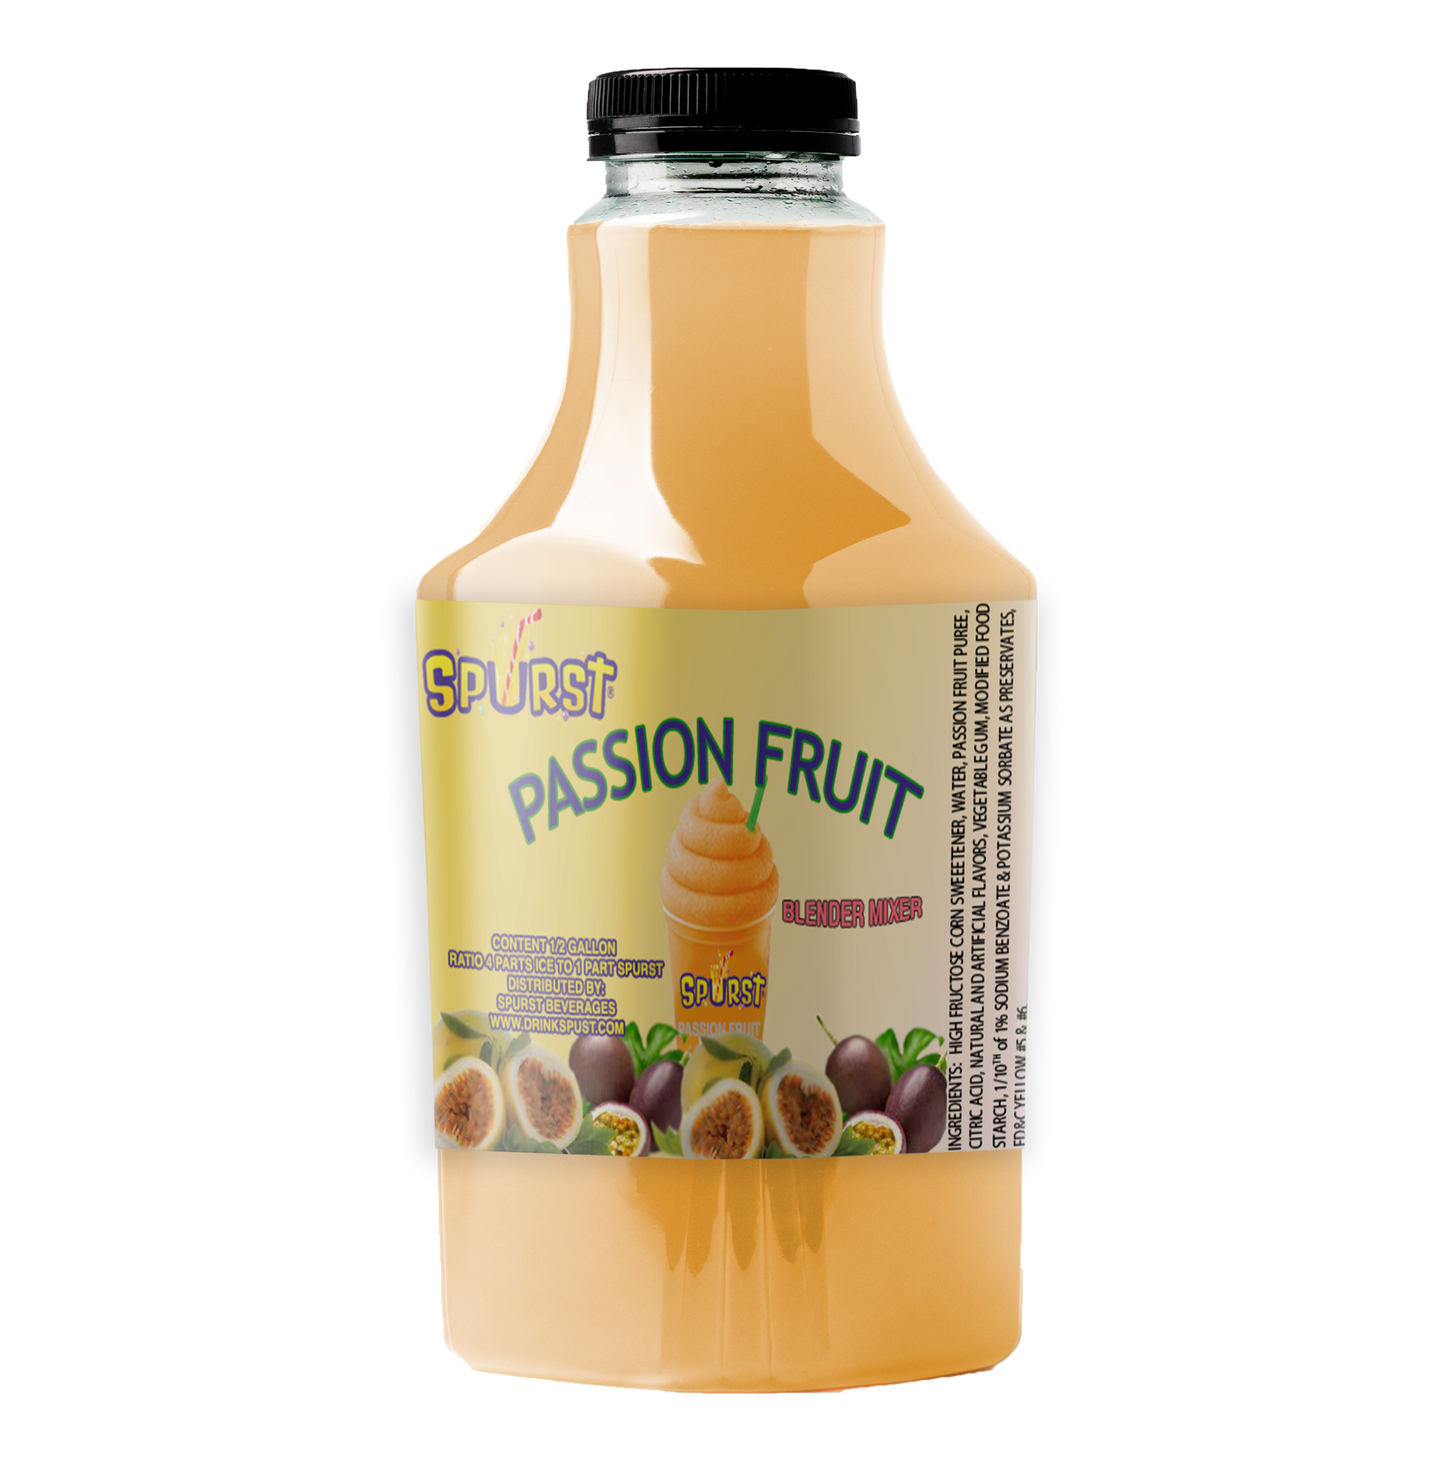 Passion Fruit Blender Mixer